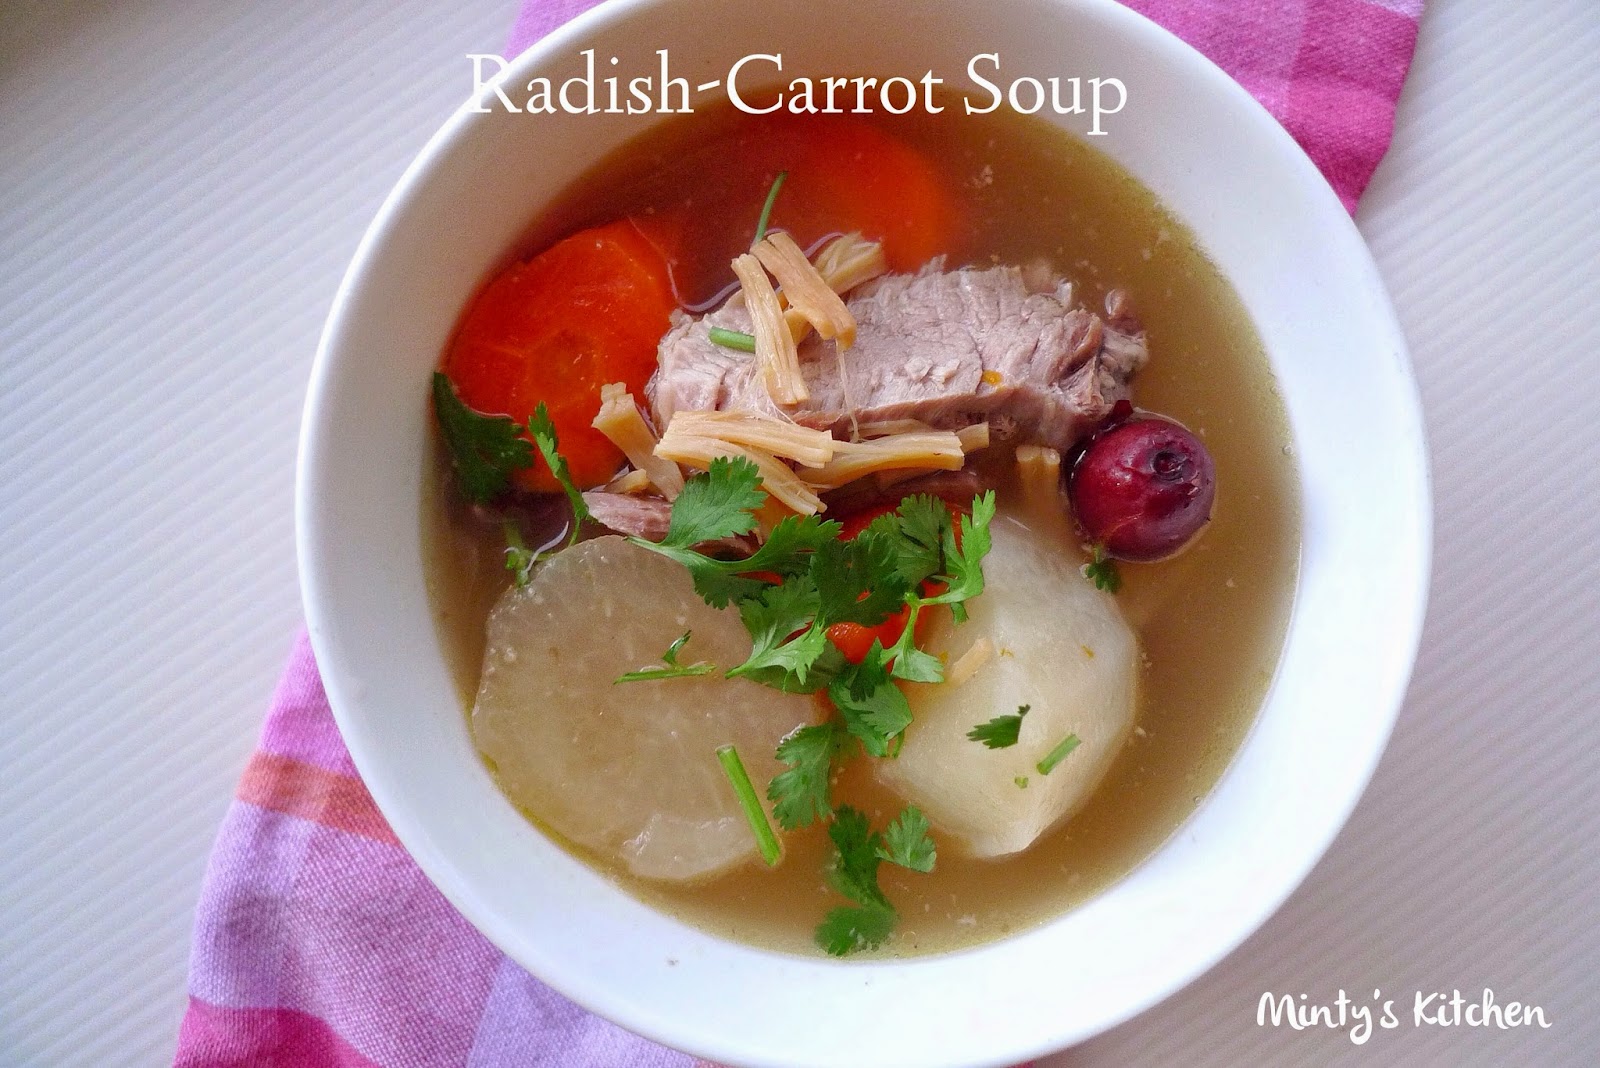 Mintys Kitchen: Radish and Carrot Soup